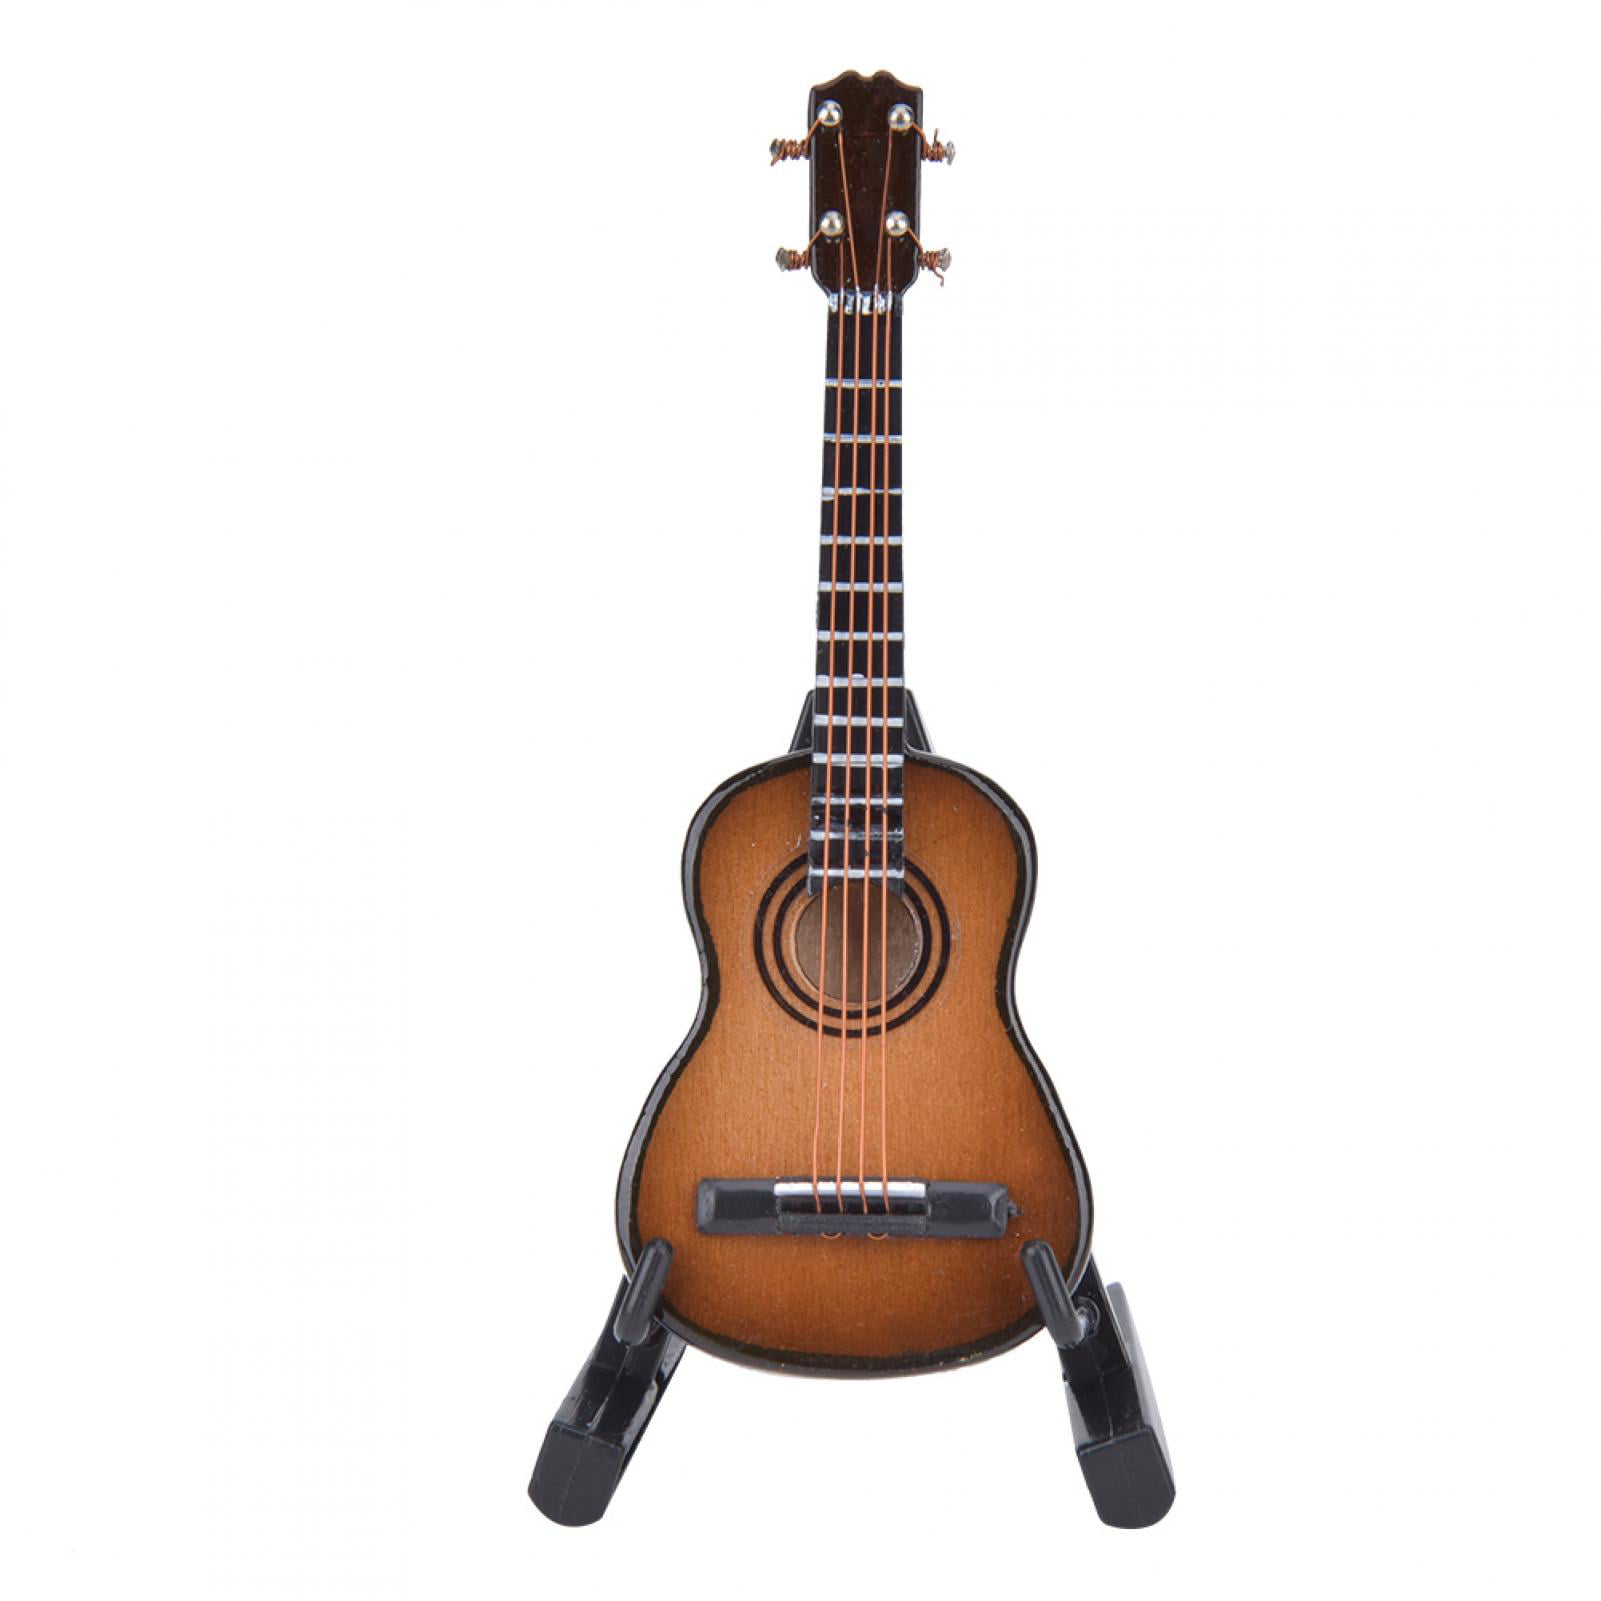 Miniature Acoustic Guitar Model Mini Wood Guitar Decor Musical Instrument  Gift 